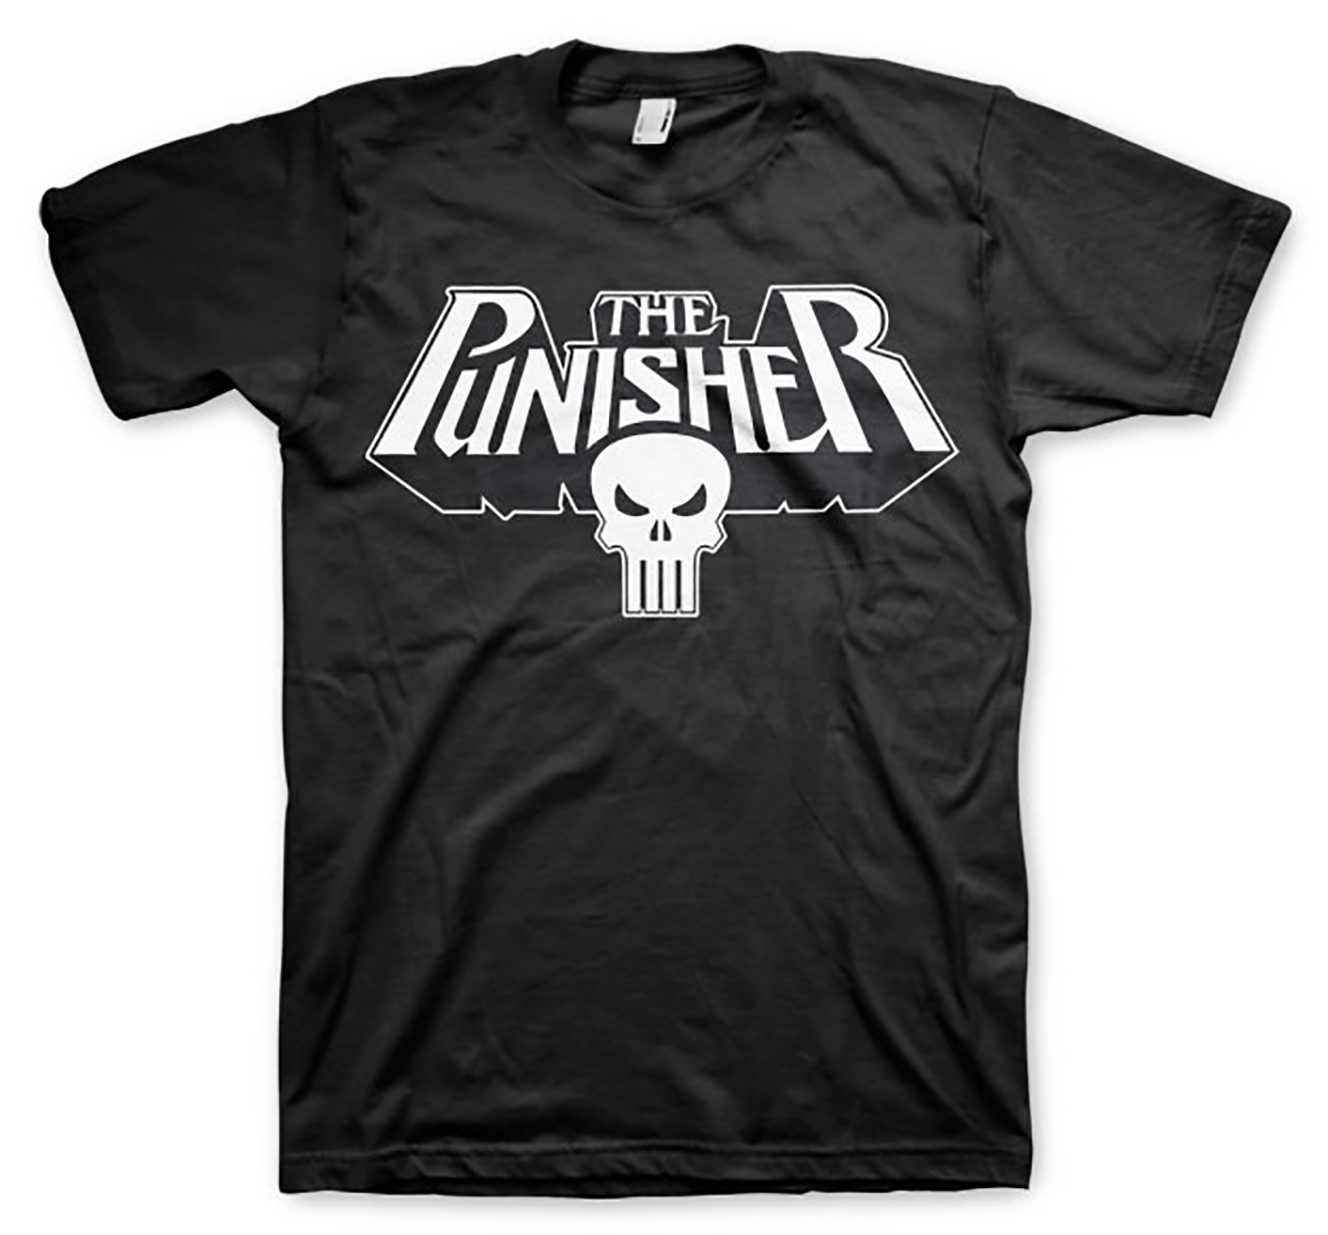 Sort The Punisher T-shirt